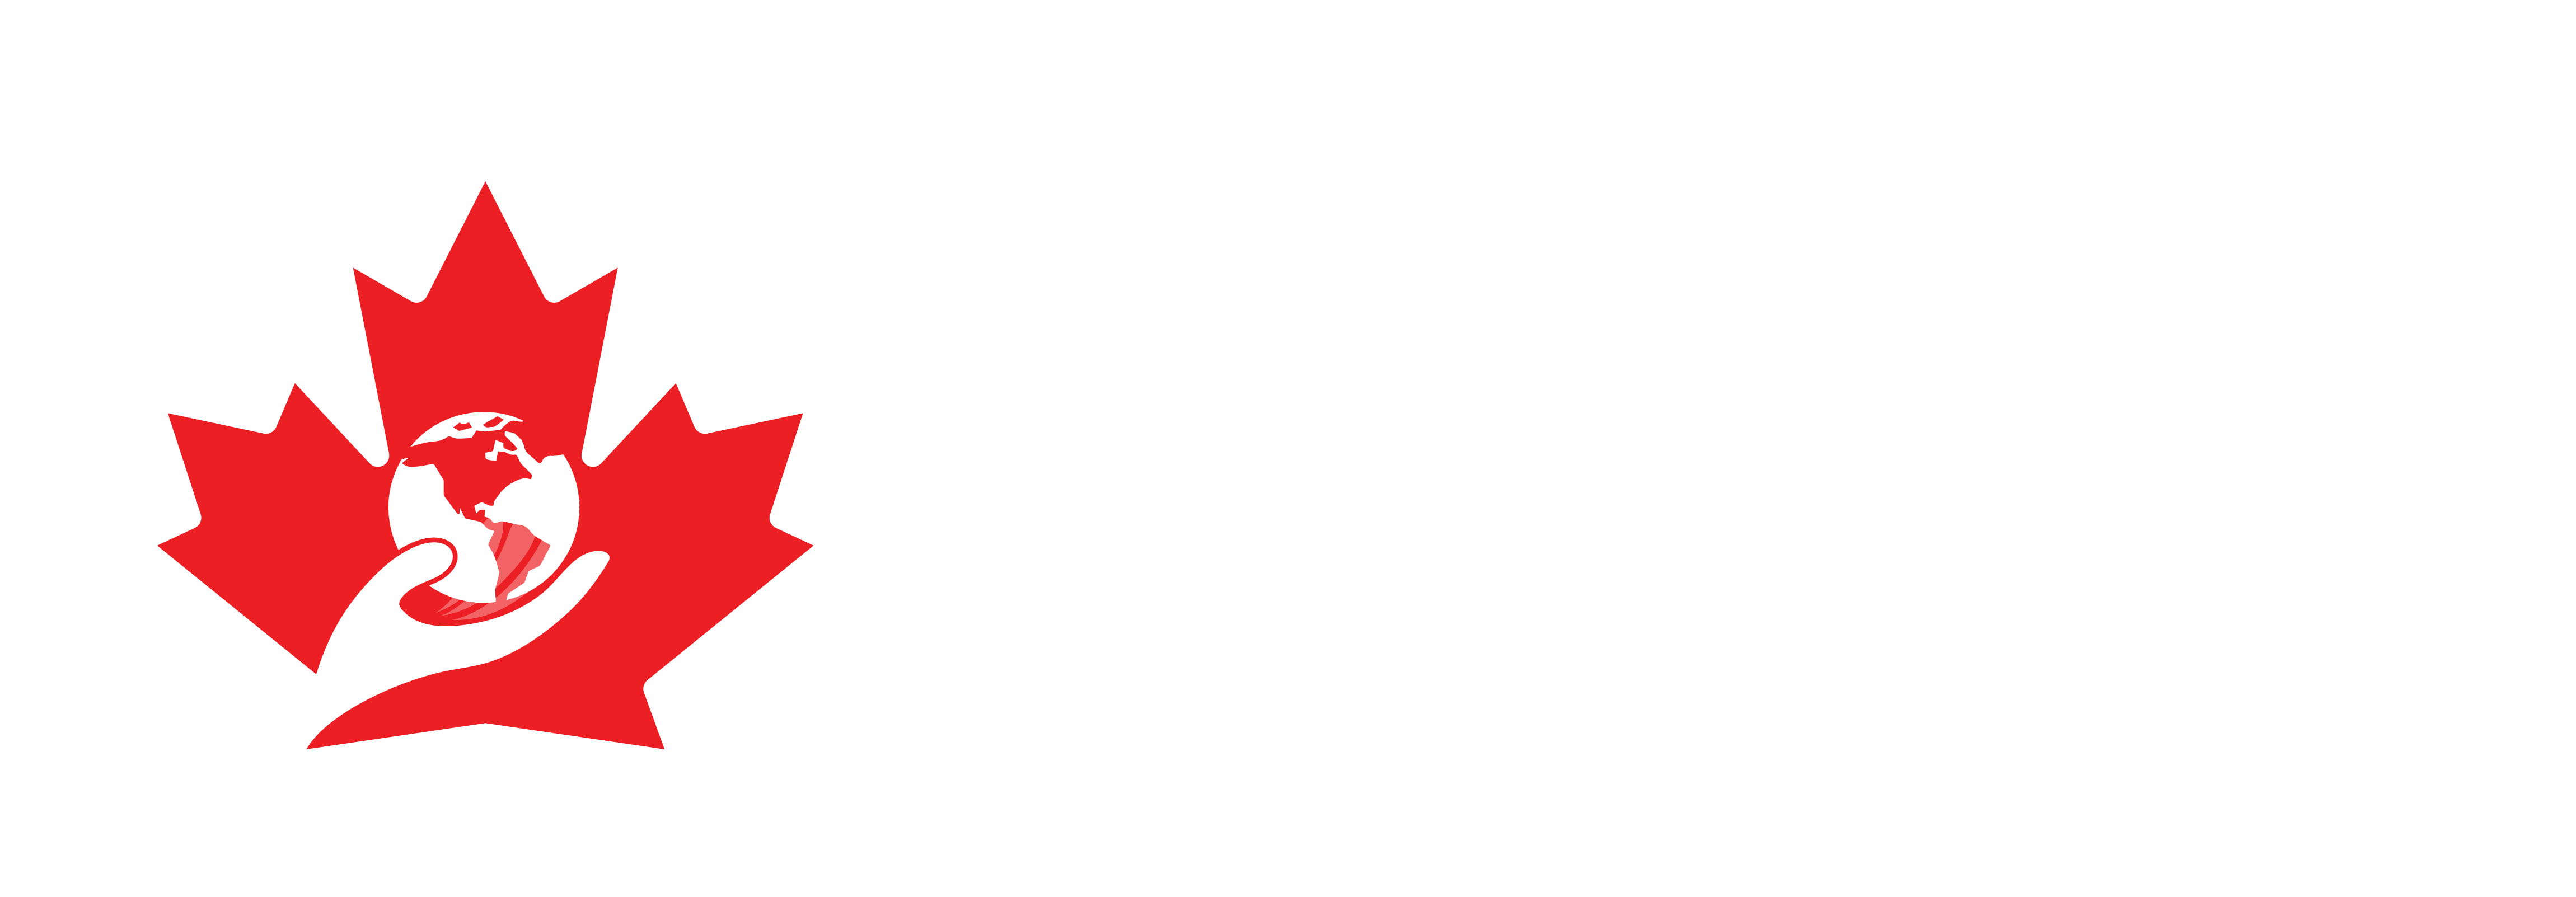 diaspora